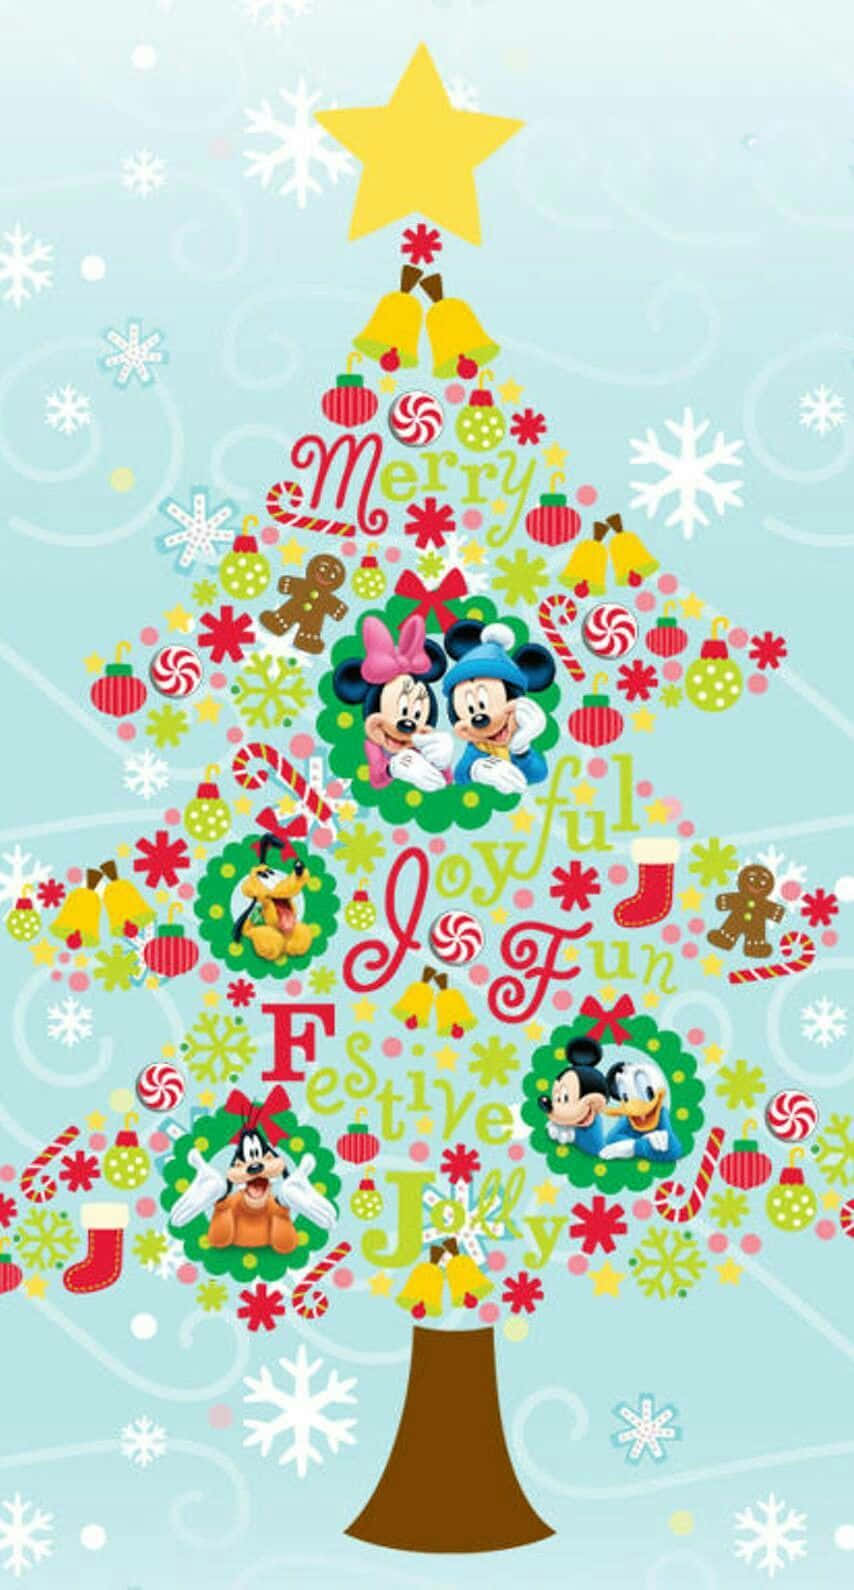 Enjoy the joy of Christmas with a Disney-themed iPad Wallpaper